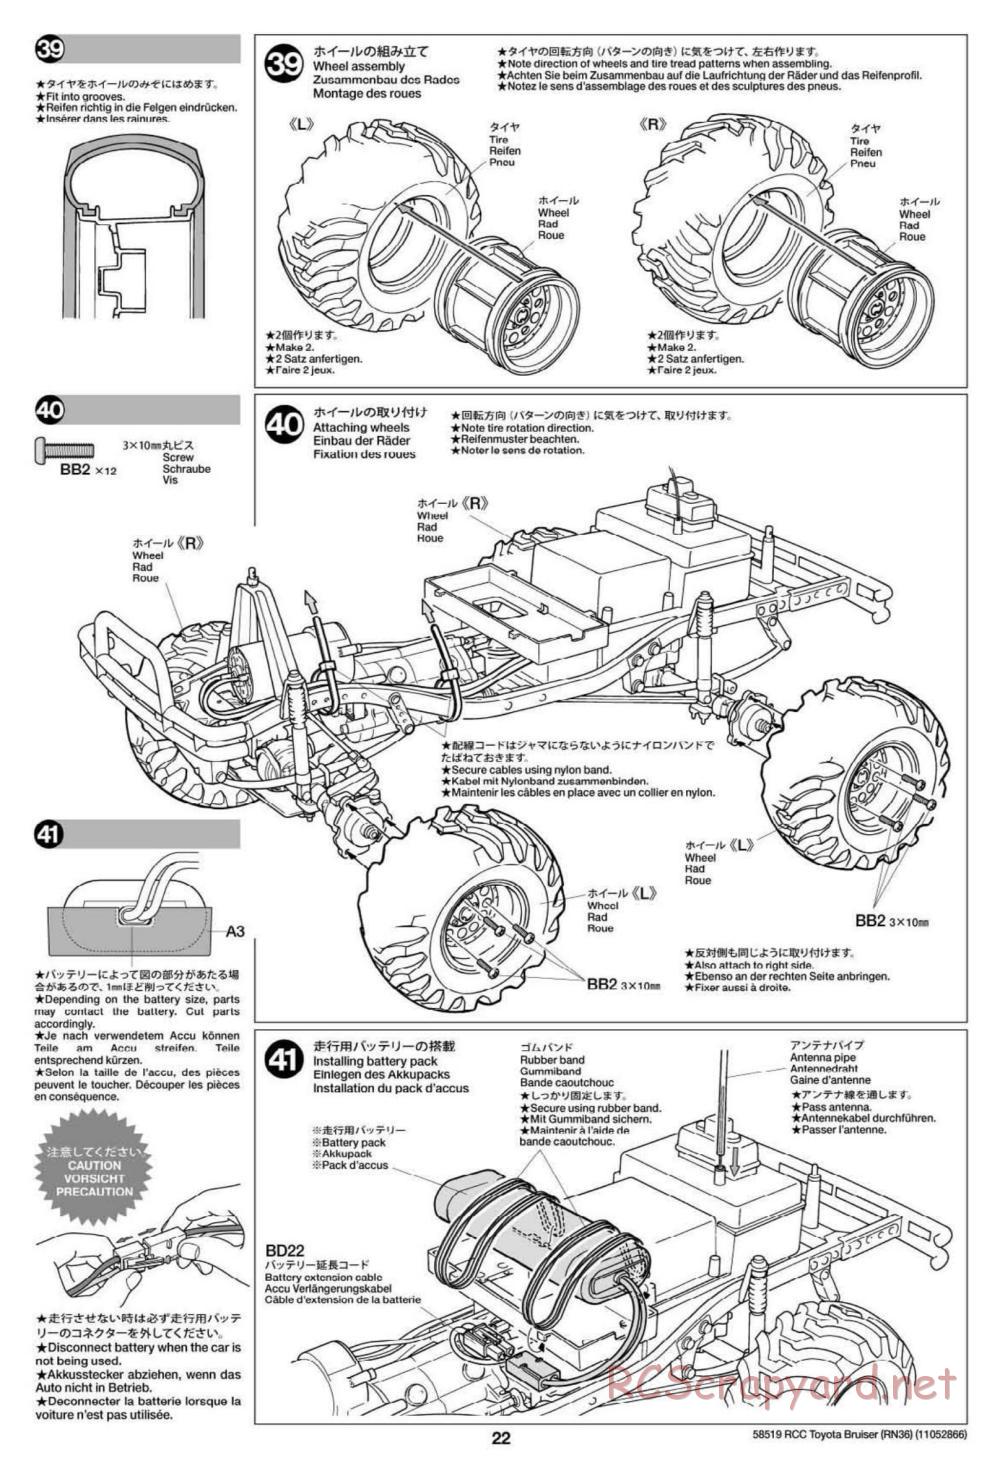 Tamiya - Toyota 4x4 Pick Up Bruiser Chassis - Manual - Page 22